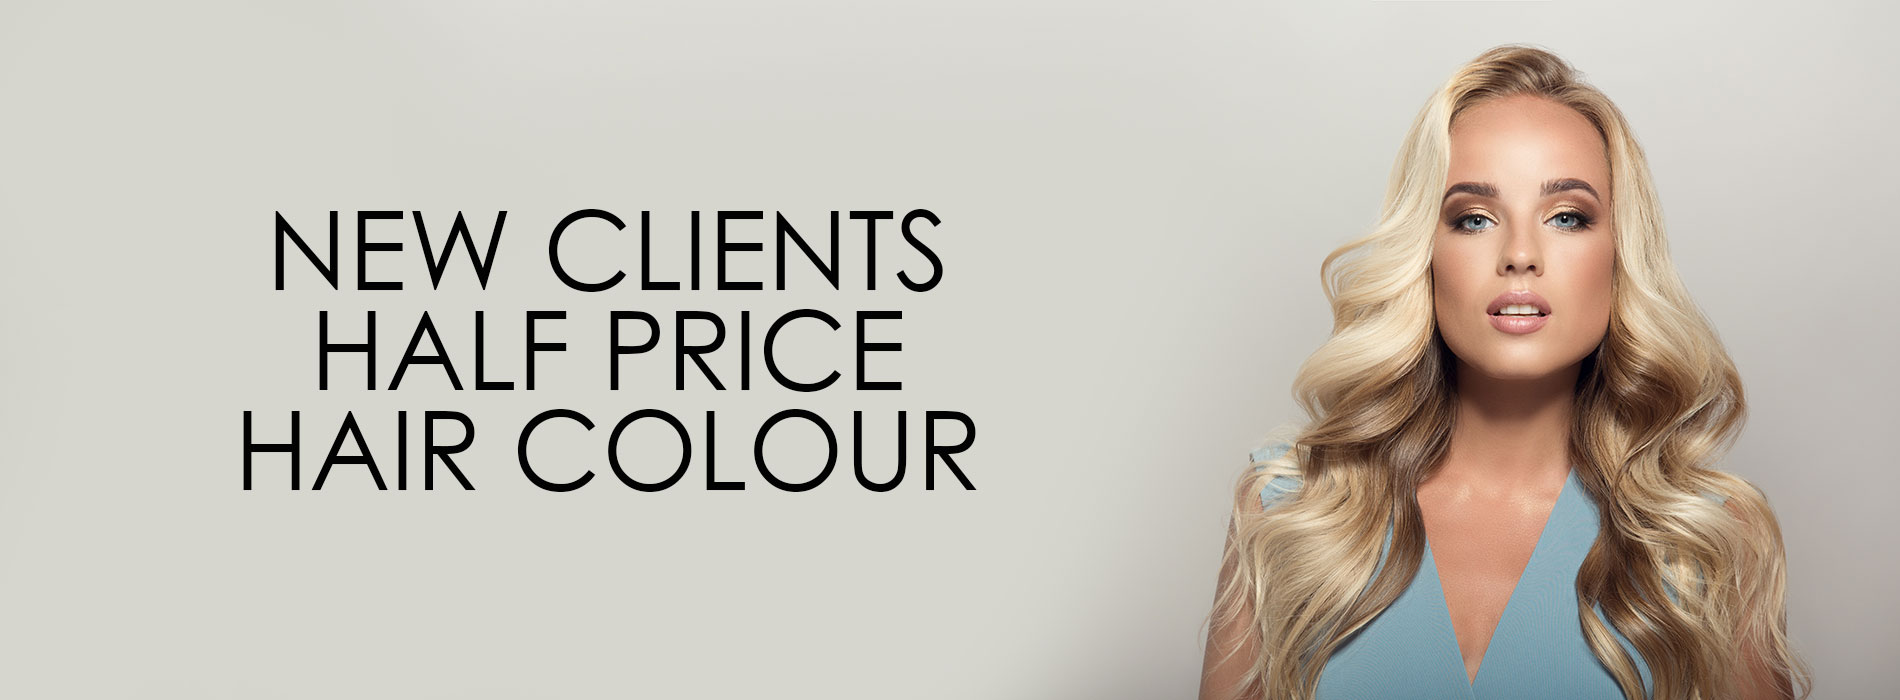 New Clients Half Price Hair Colour Edlesborough Dunstable Hairdressers